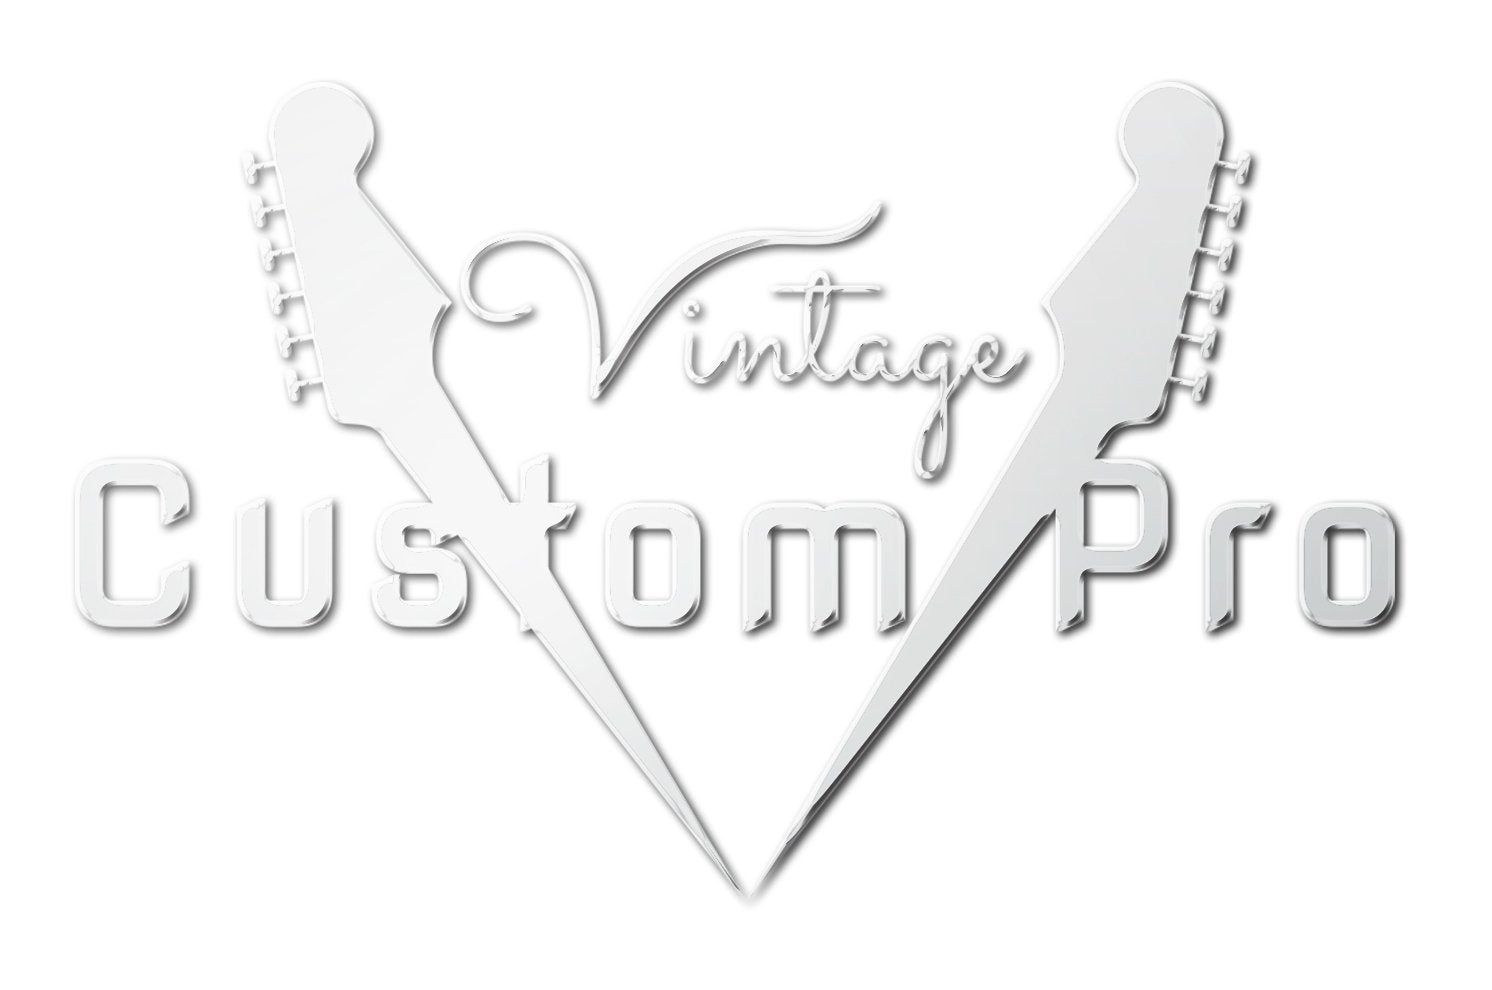 Vintage* LVS6 Electric Guitar, Electric Guitar for sale at Richards Guitars.